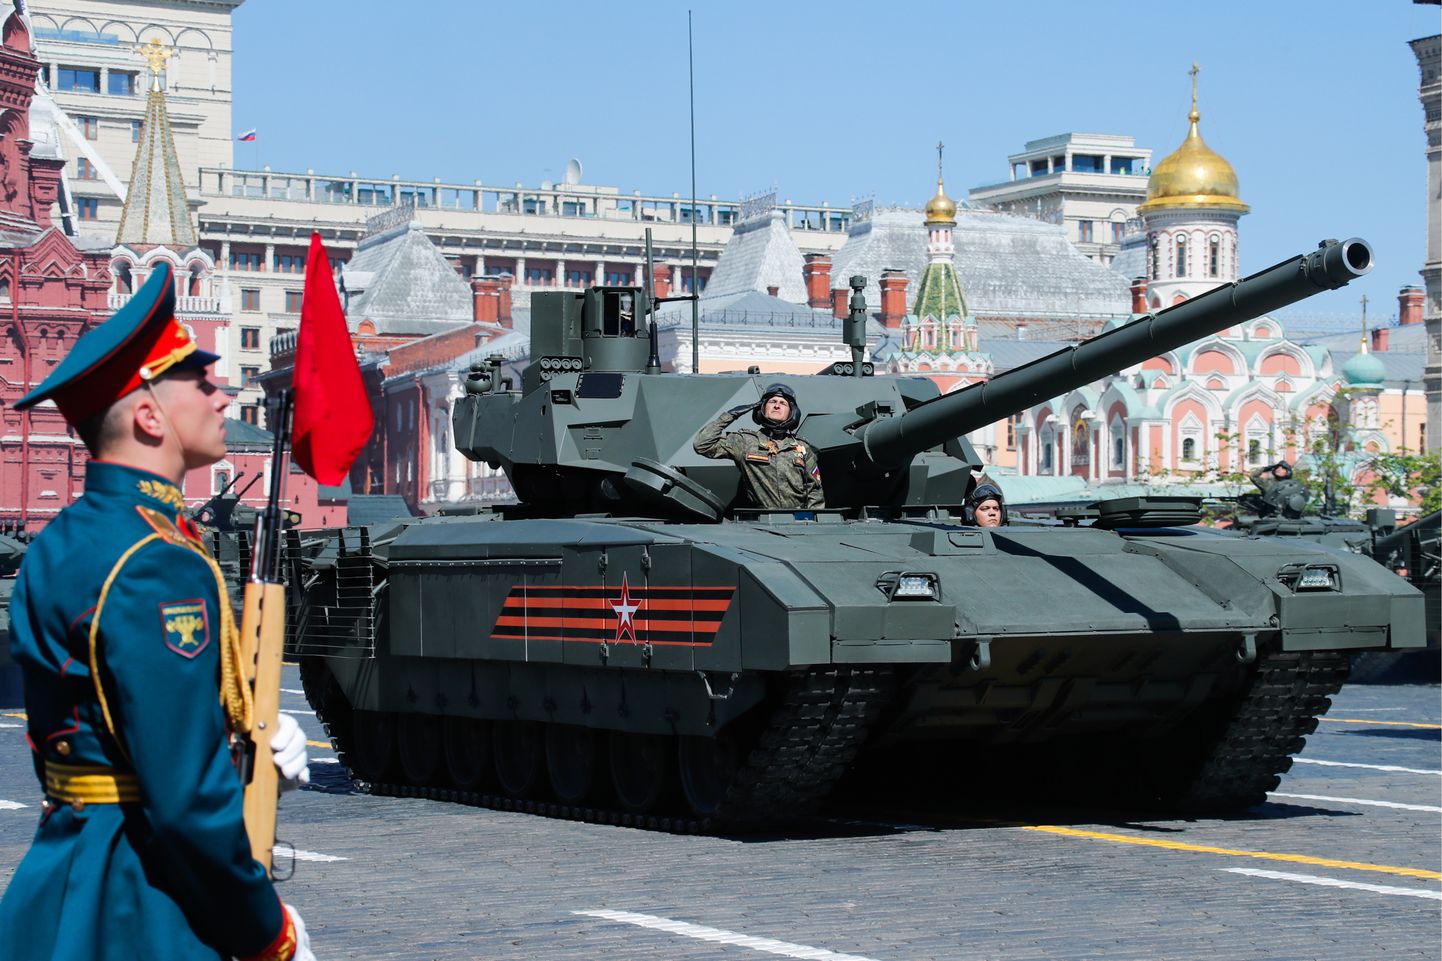 Armata T-14 tank Moskvas.